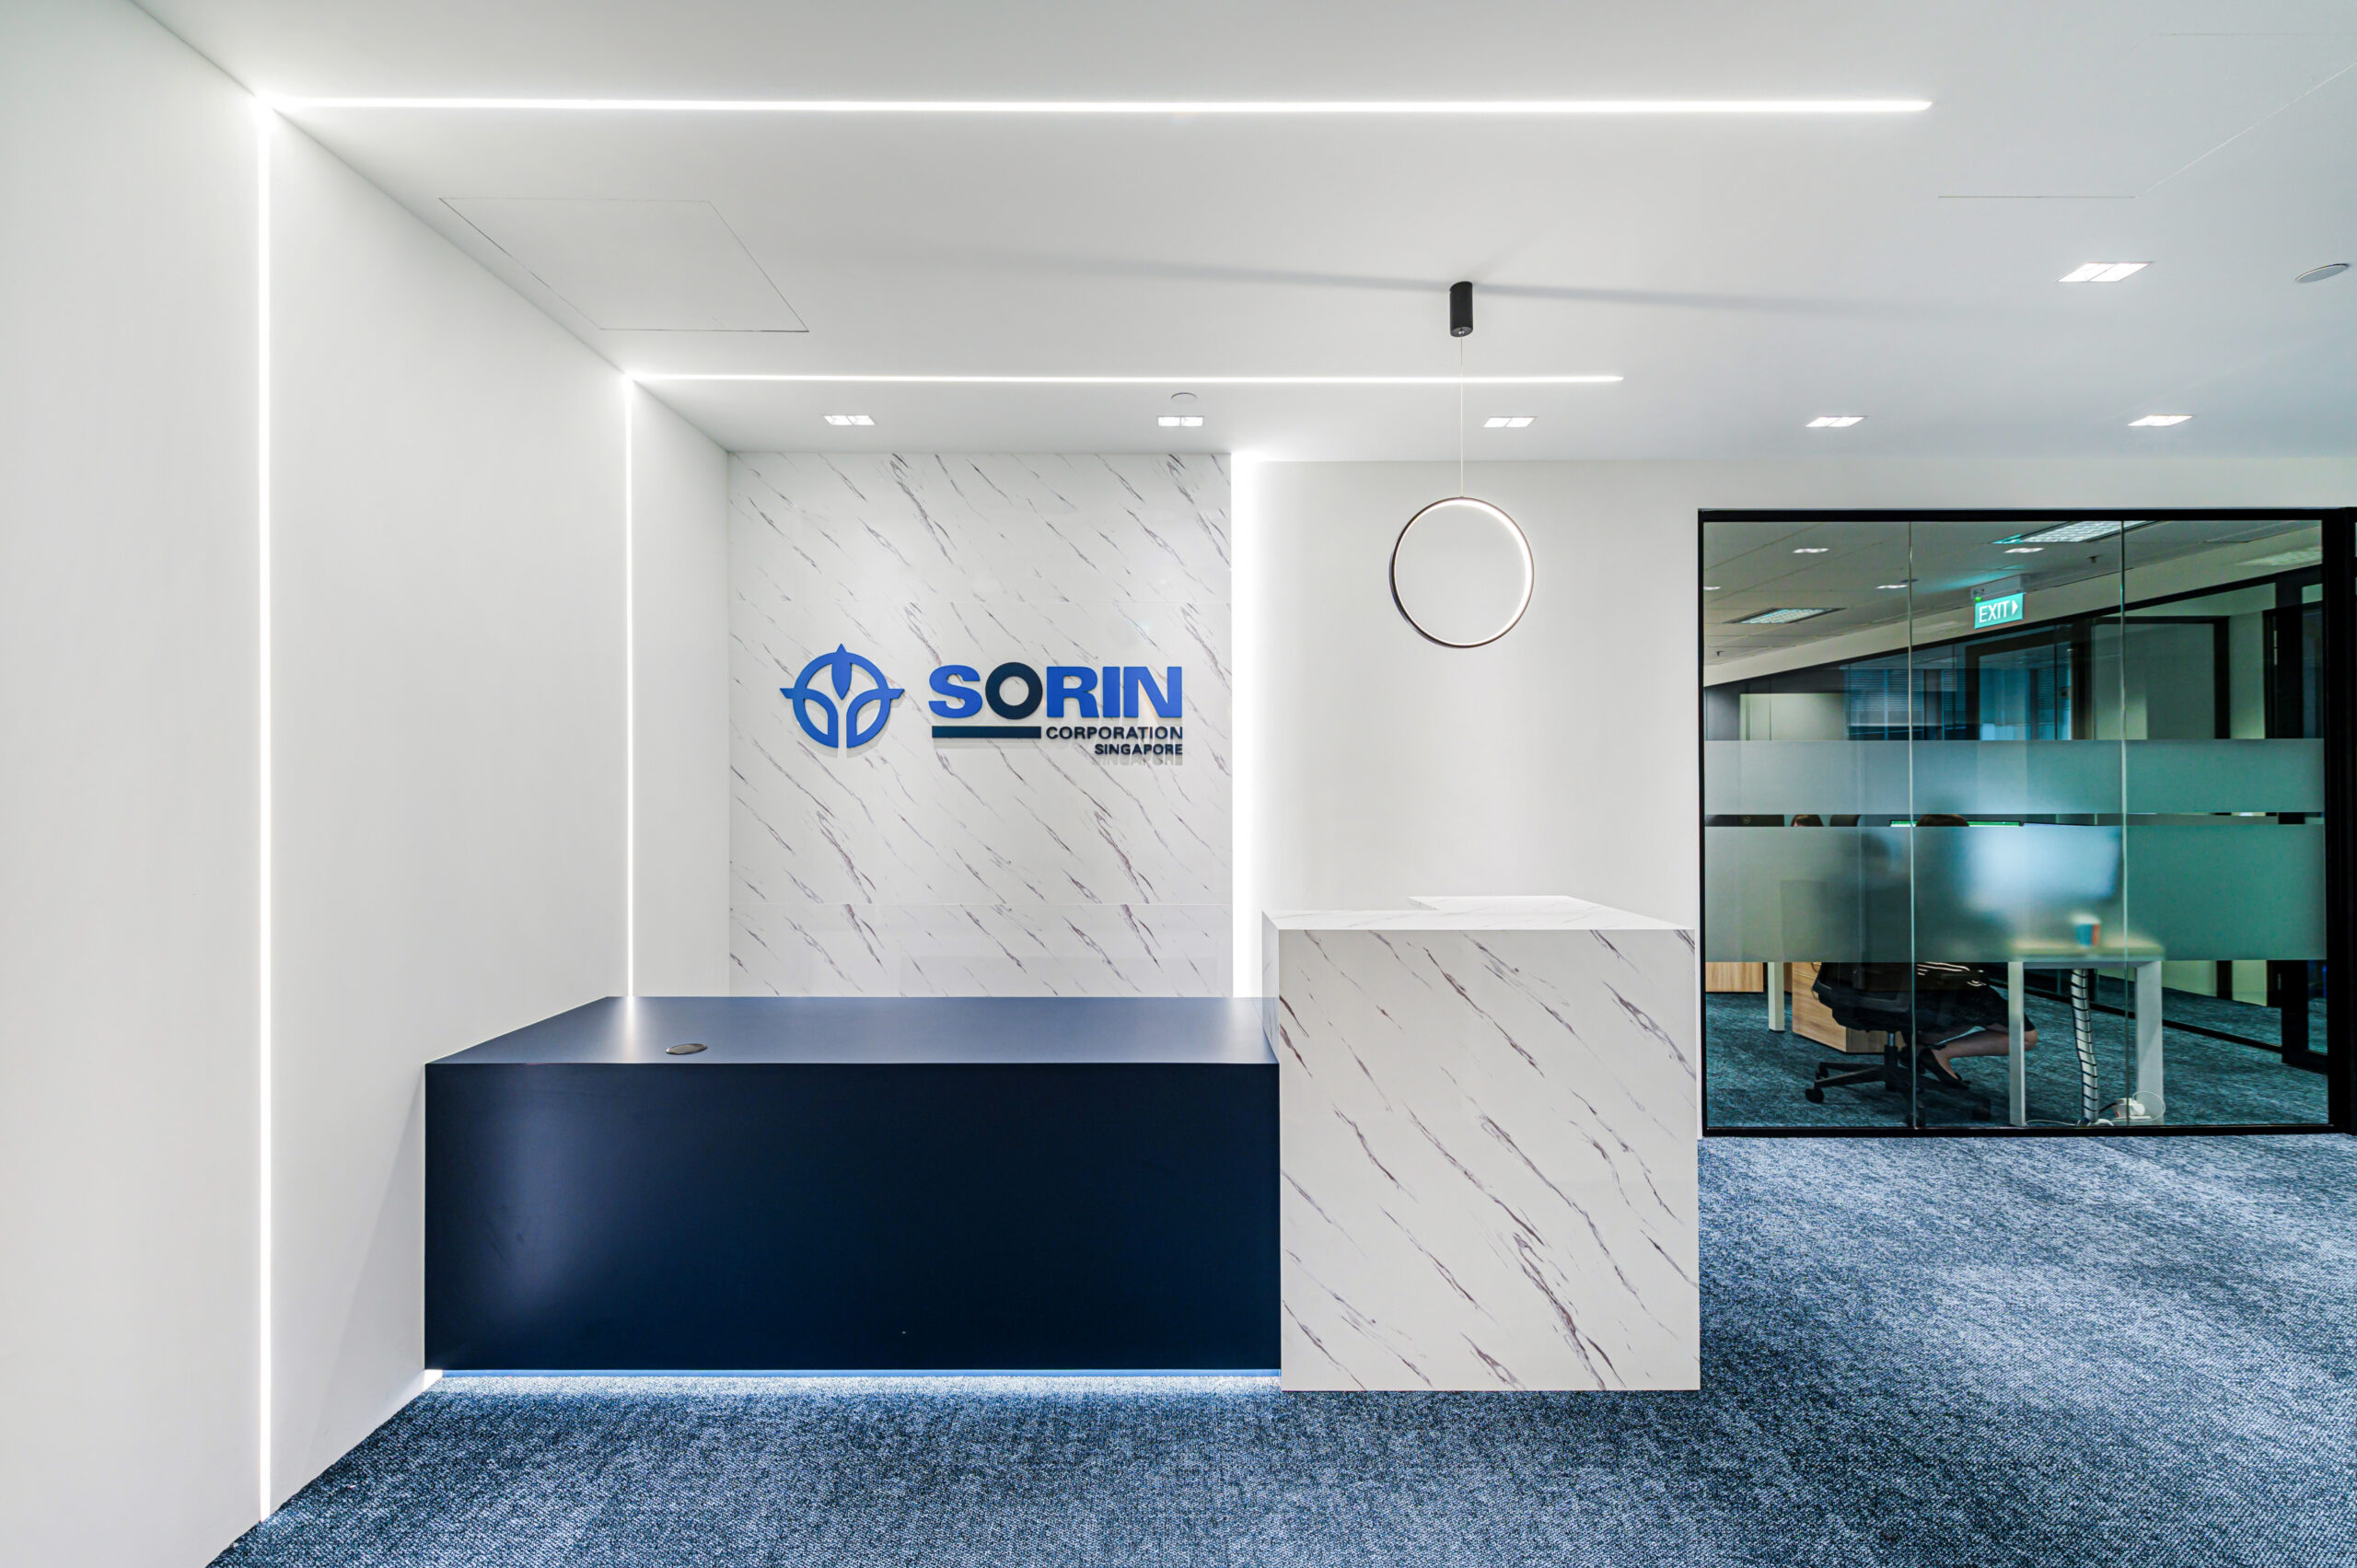 Sorin Corporation